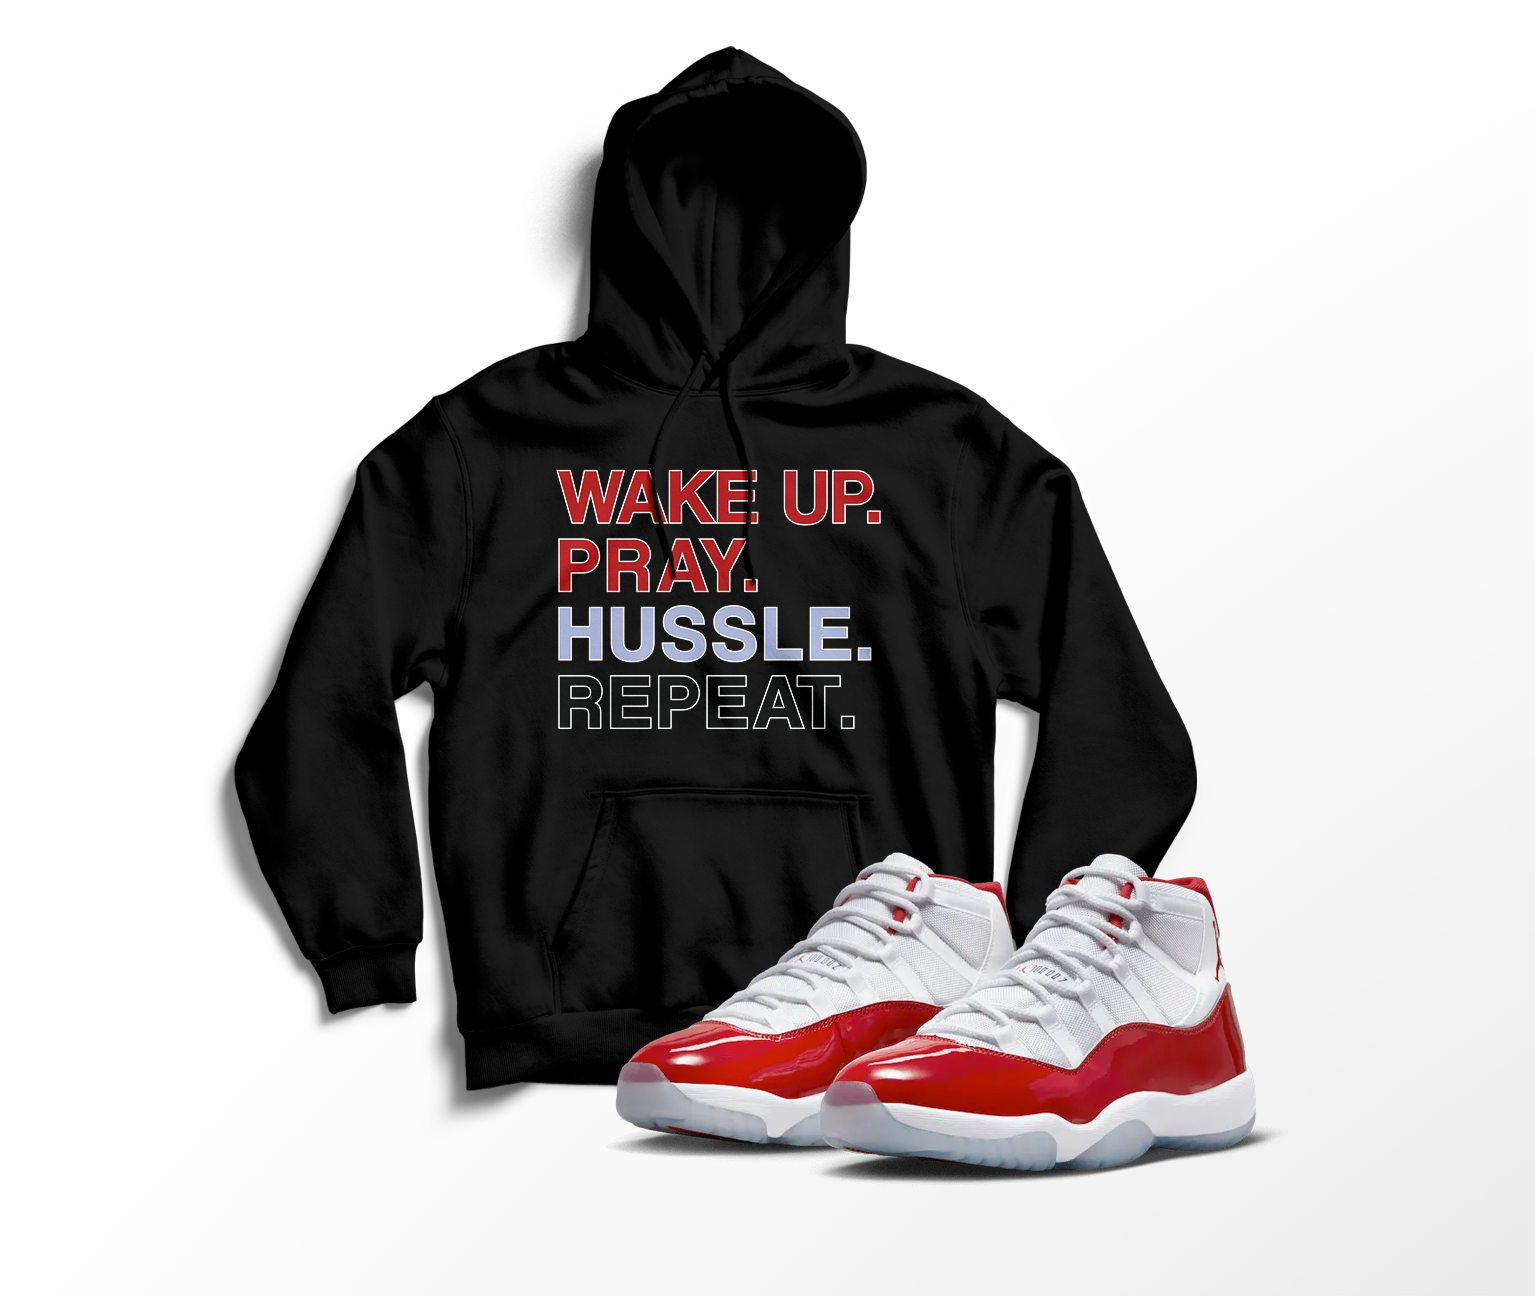 ‘Wake, Pray, & Hussle’ Custom Graphic Hoodie To Match Air Jordan 11 Cherry Red